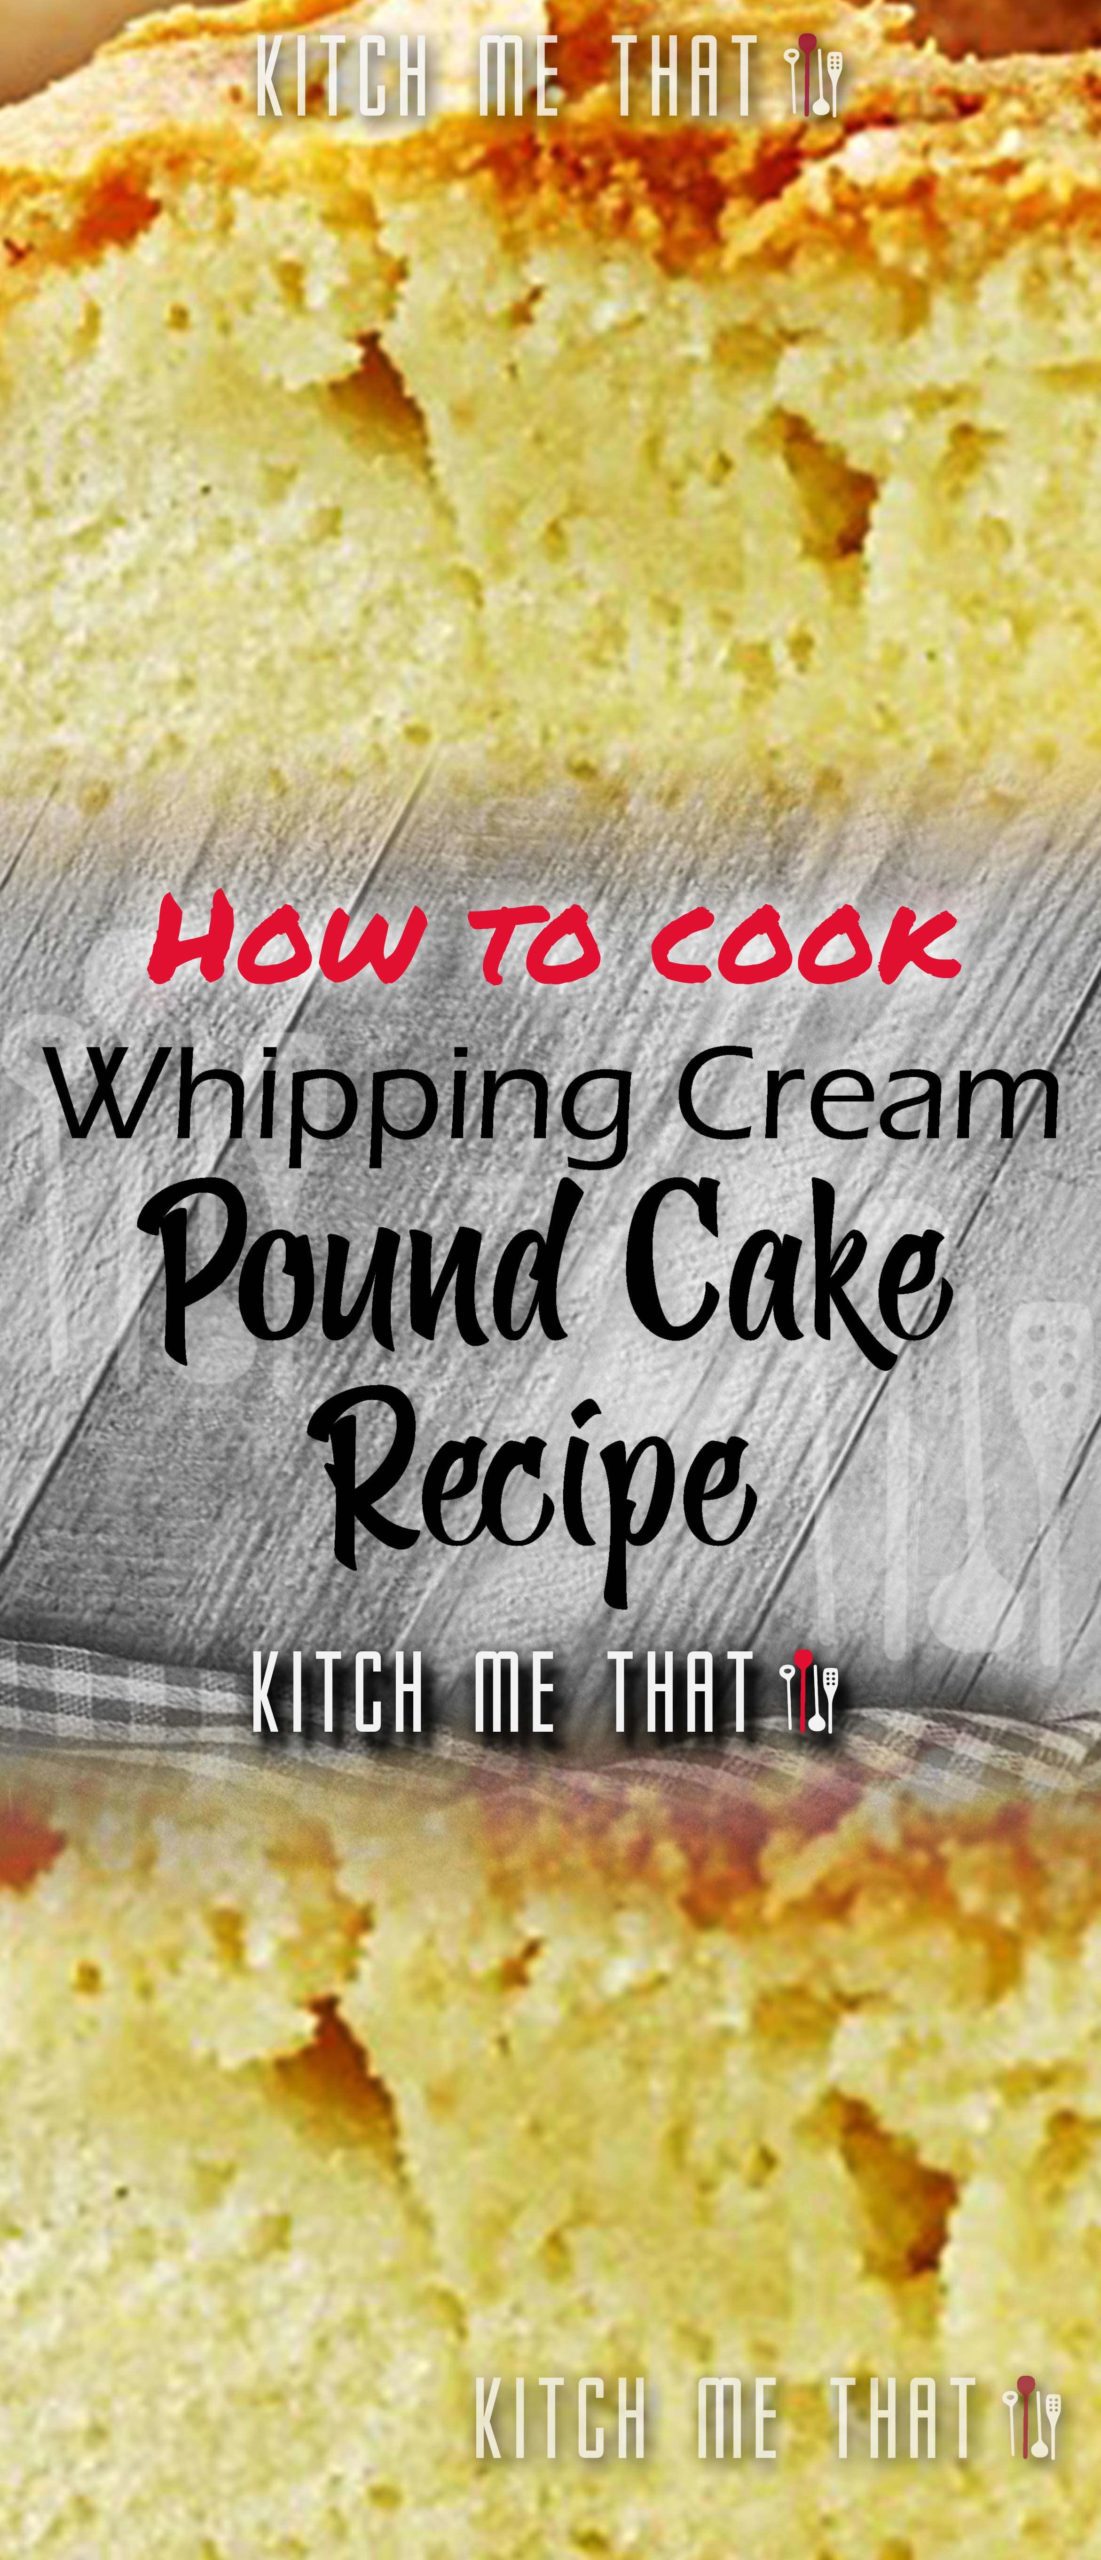 Whipping Cream Pound Cake Recipe